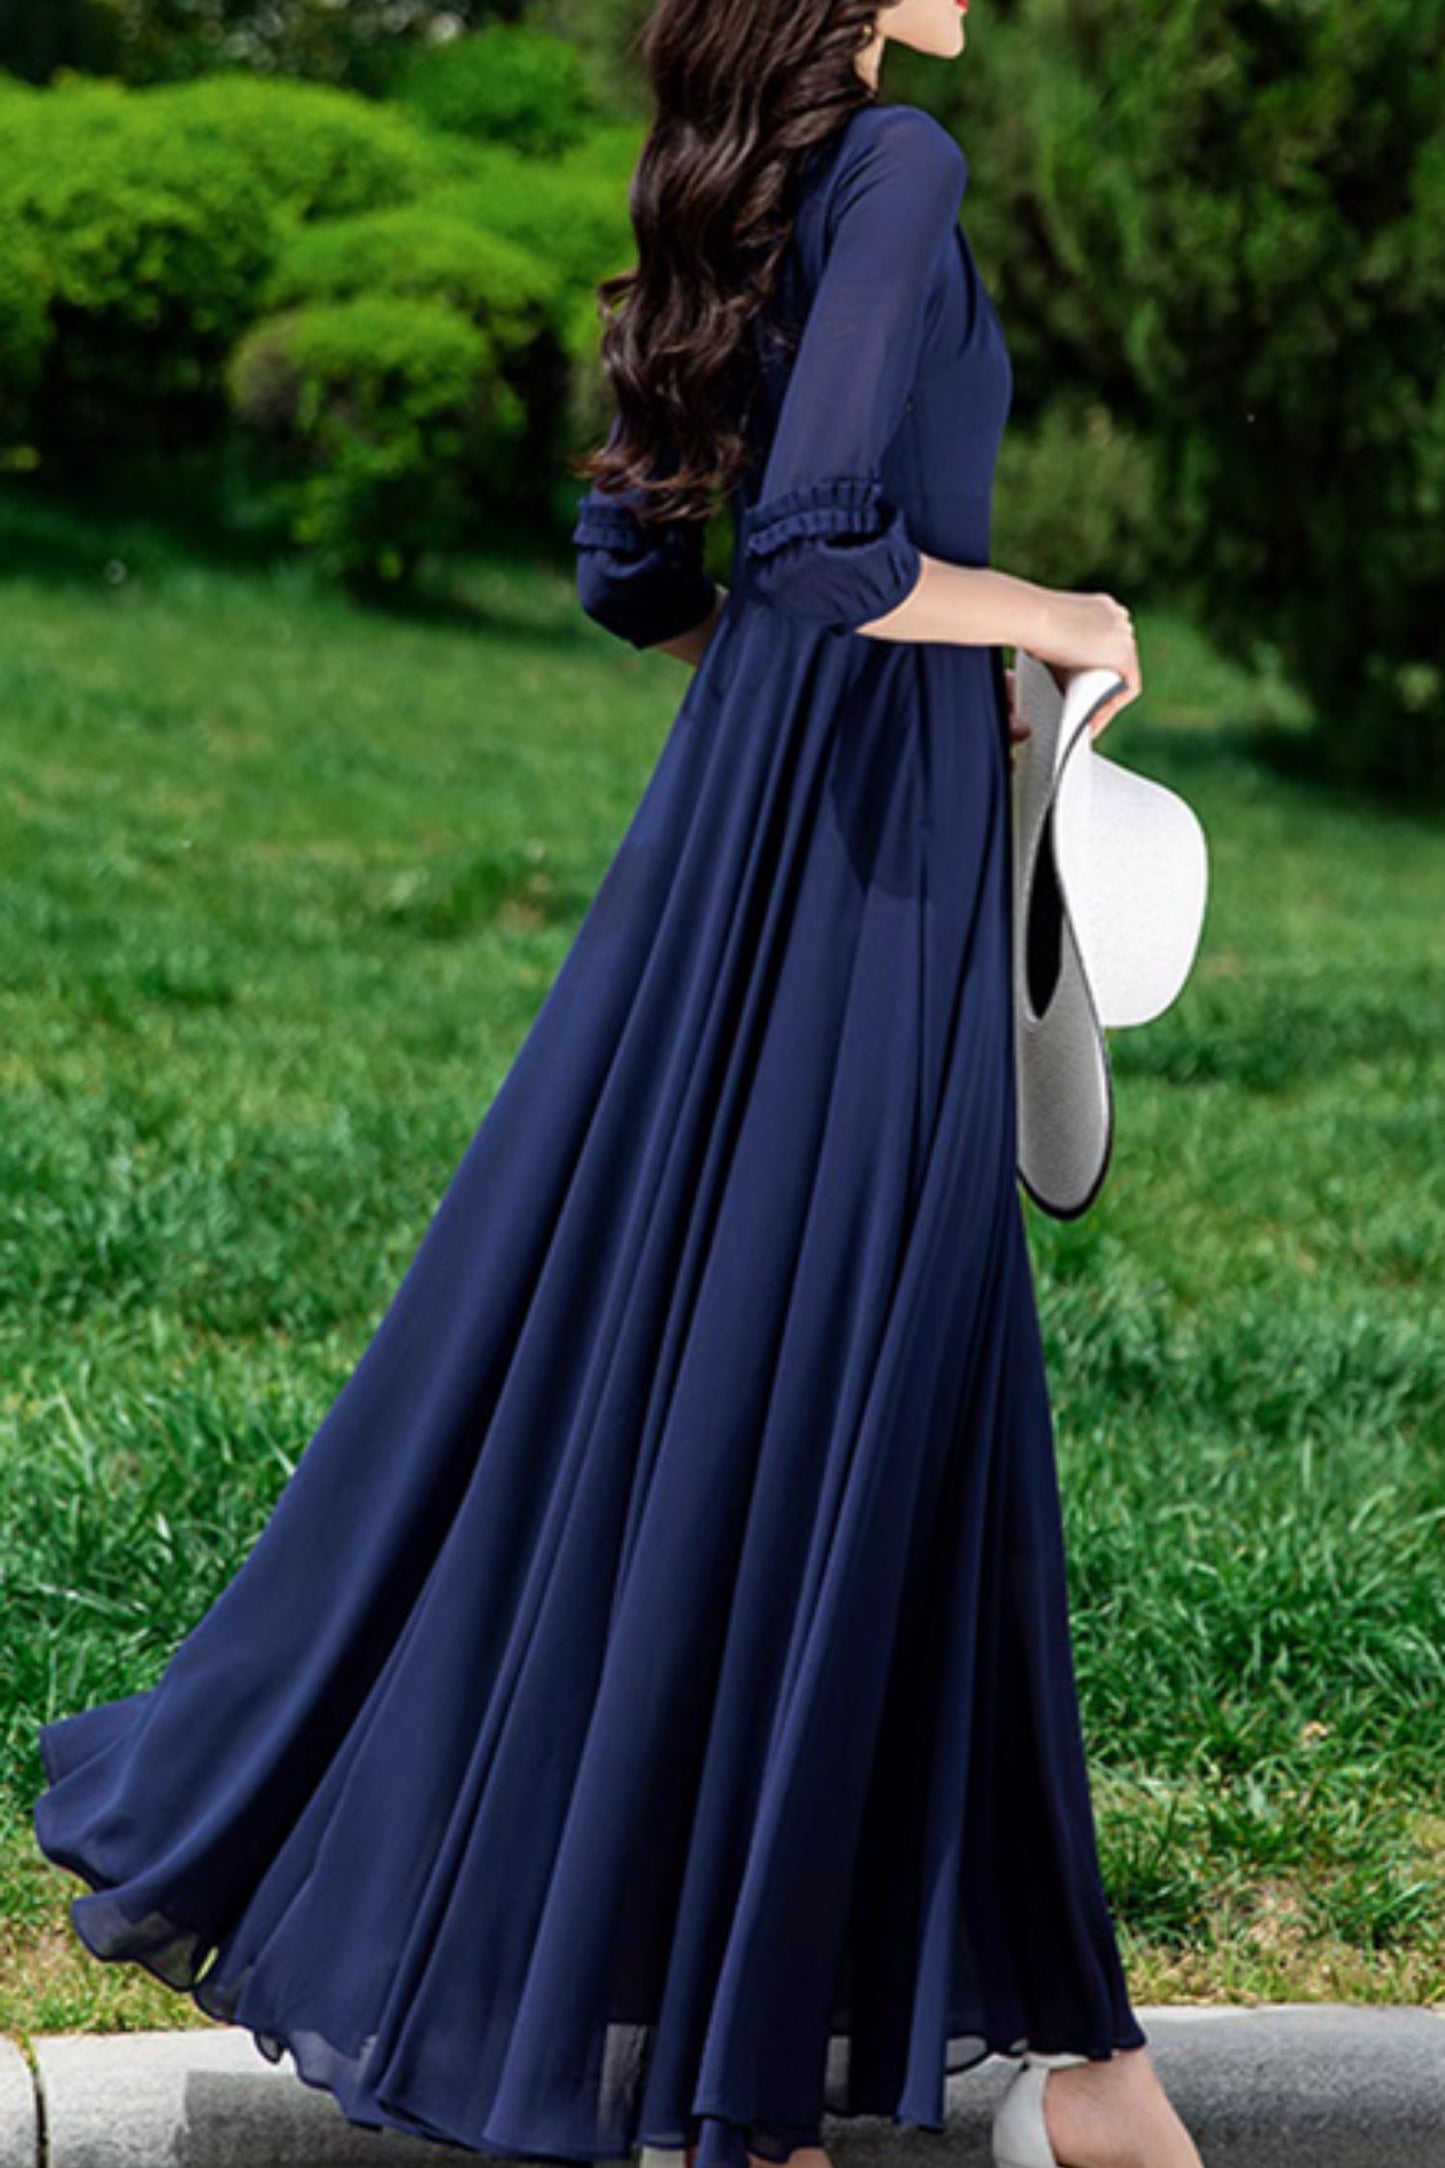 Navy blue maxi prom wedding chiffon dress 5169